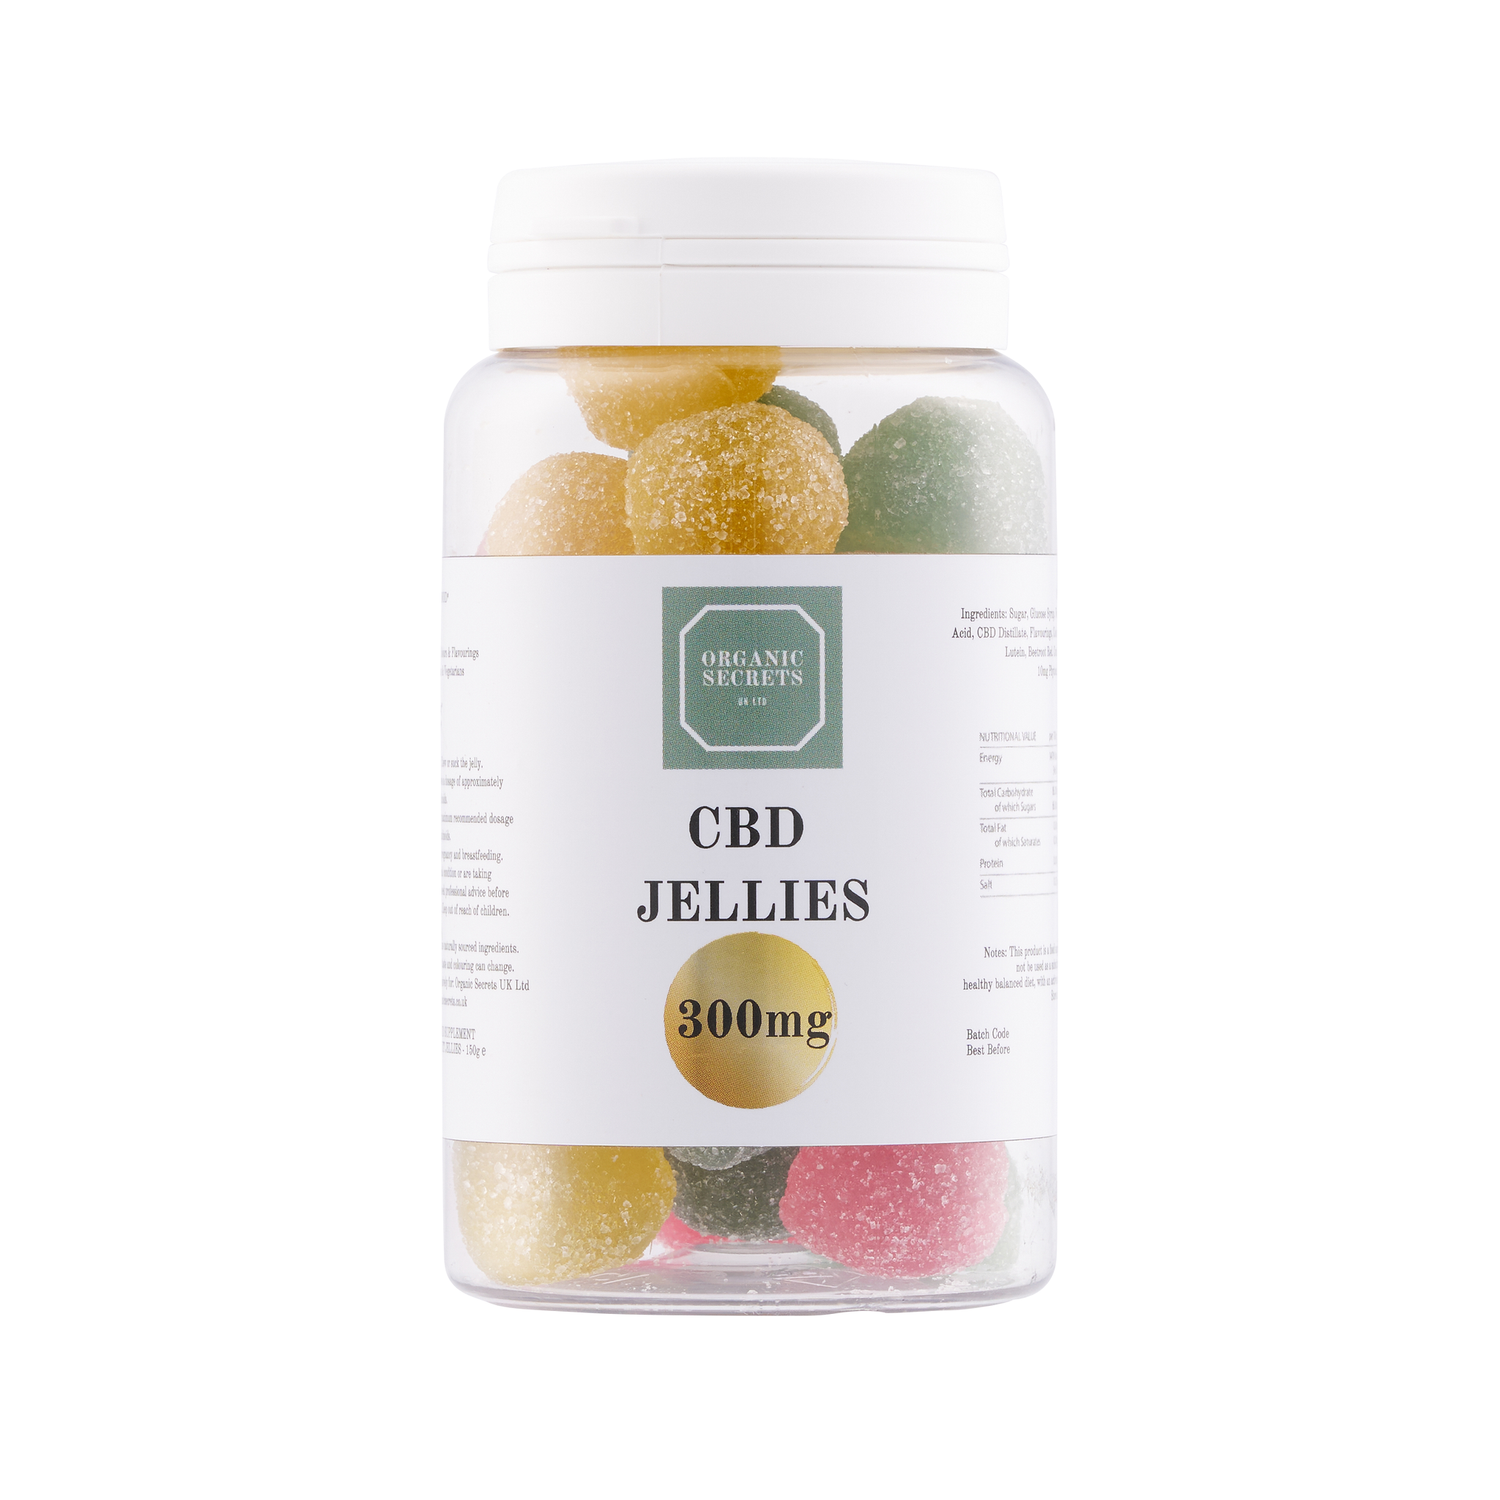 300mg jar of CBD Jellies suitable for vegans